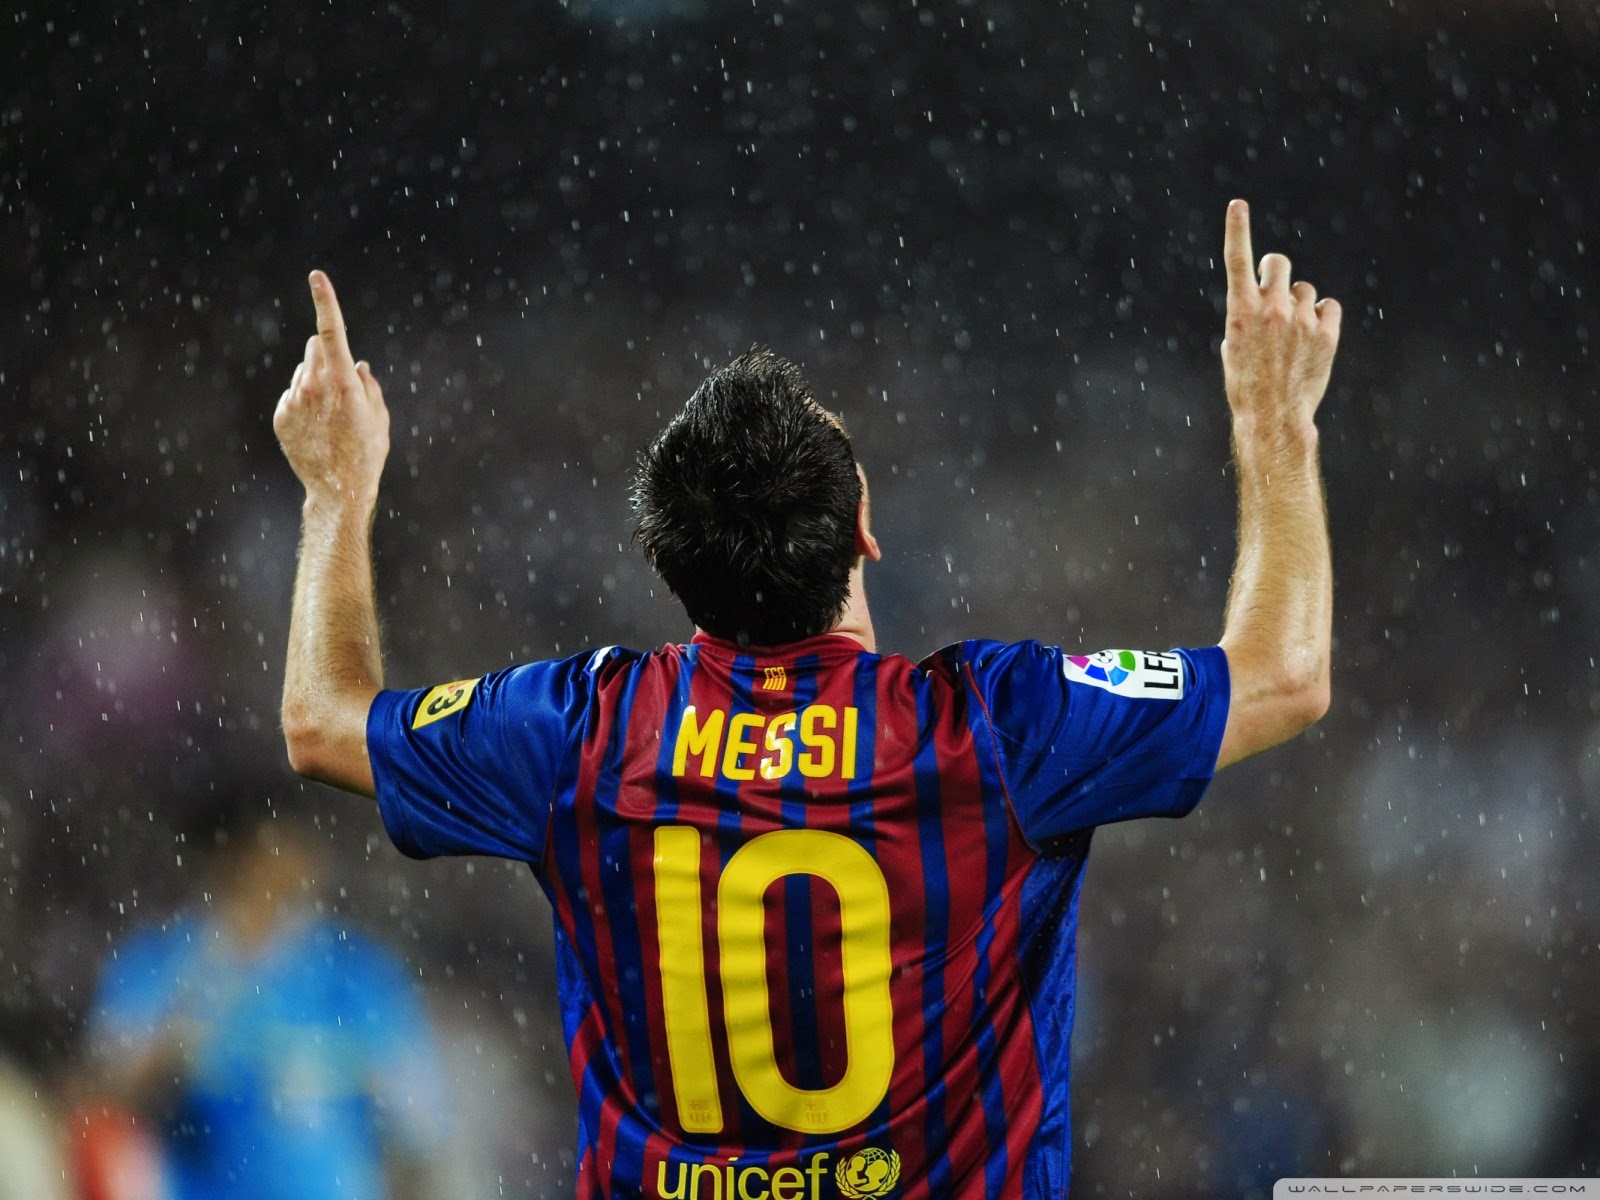  wallpapers Messi 2015 wallpaper Lionel Messi Argentina wallpaper